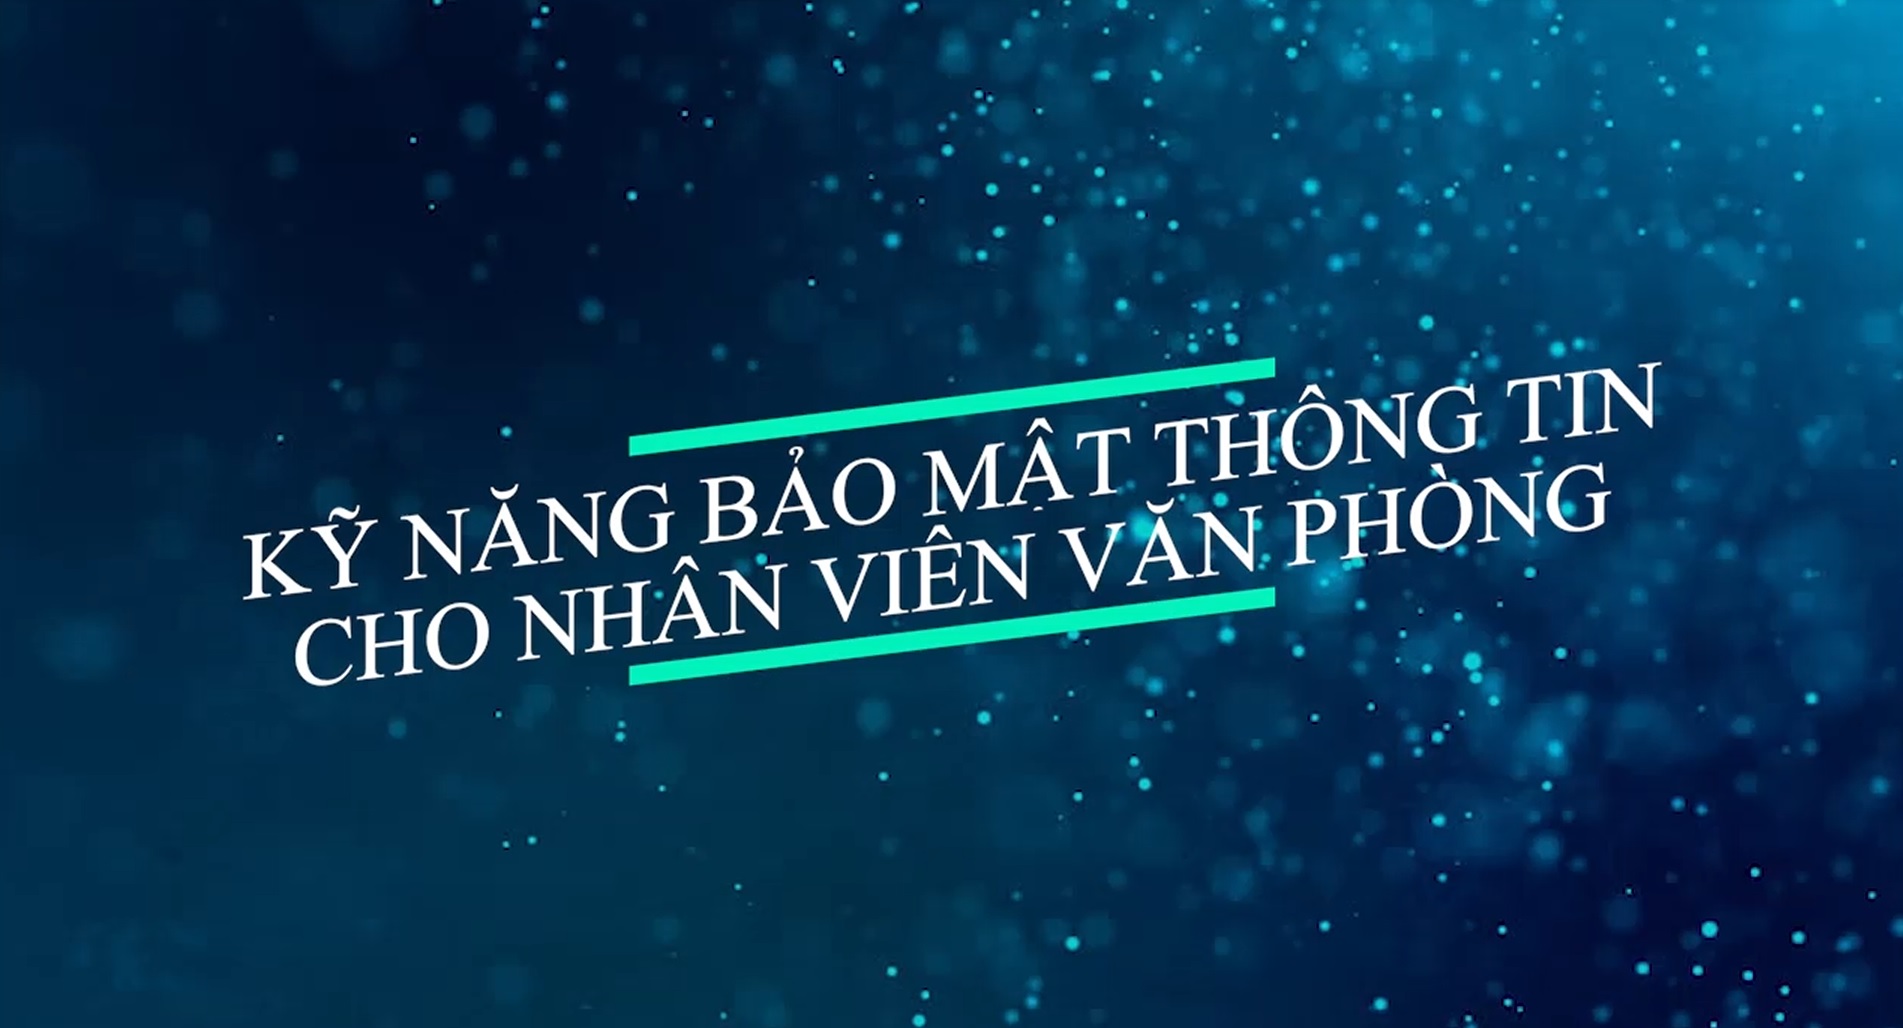 ky-nang-an-toan-bao-mat-thong-tin-cho-nhan-vien-van-phong-nguyen-khanh-tung